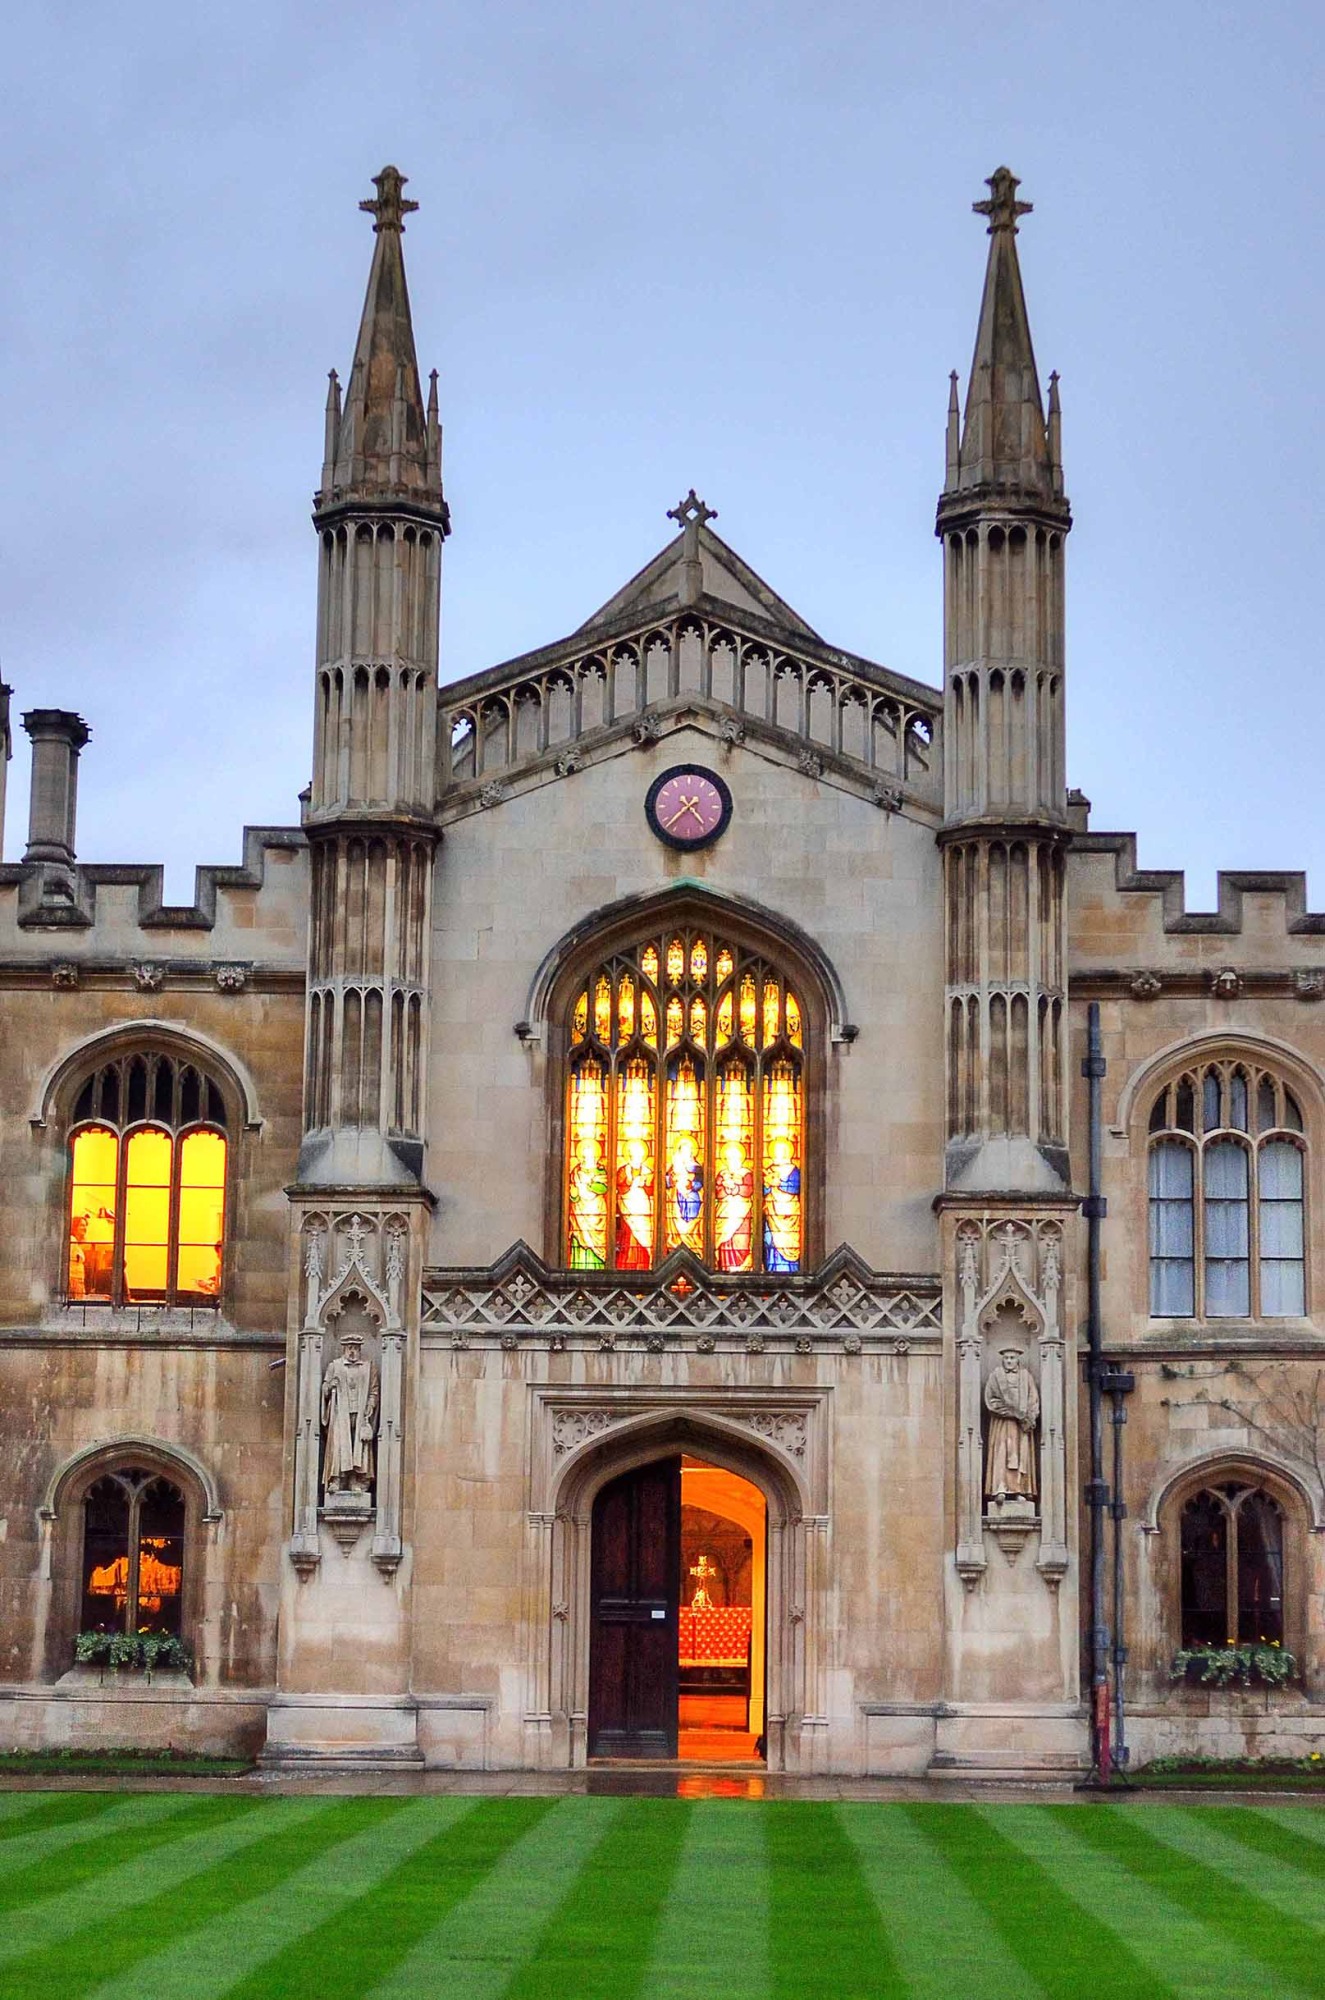 Image of St. John's College, University of Cambridge